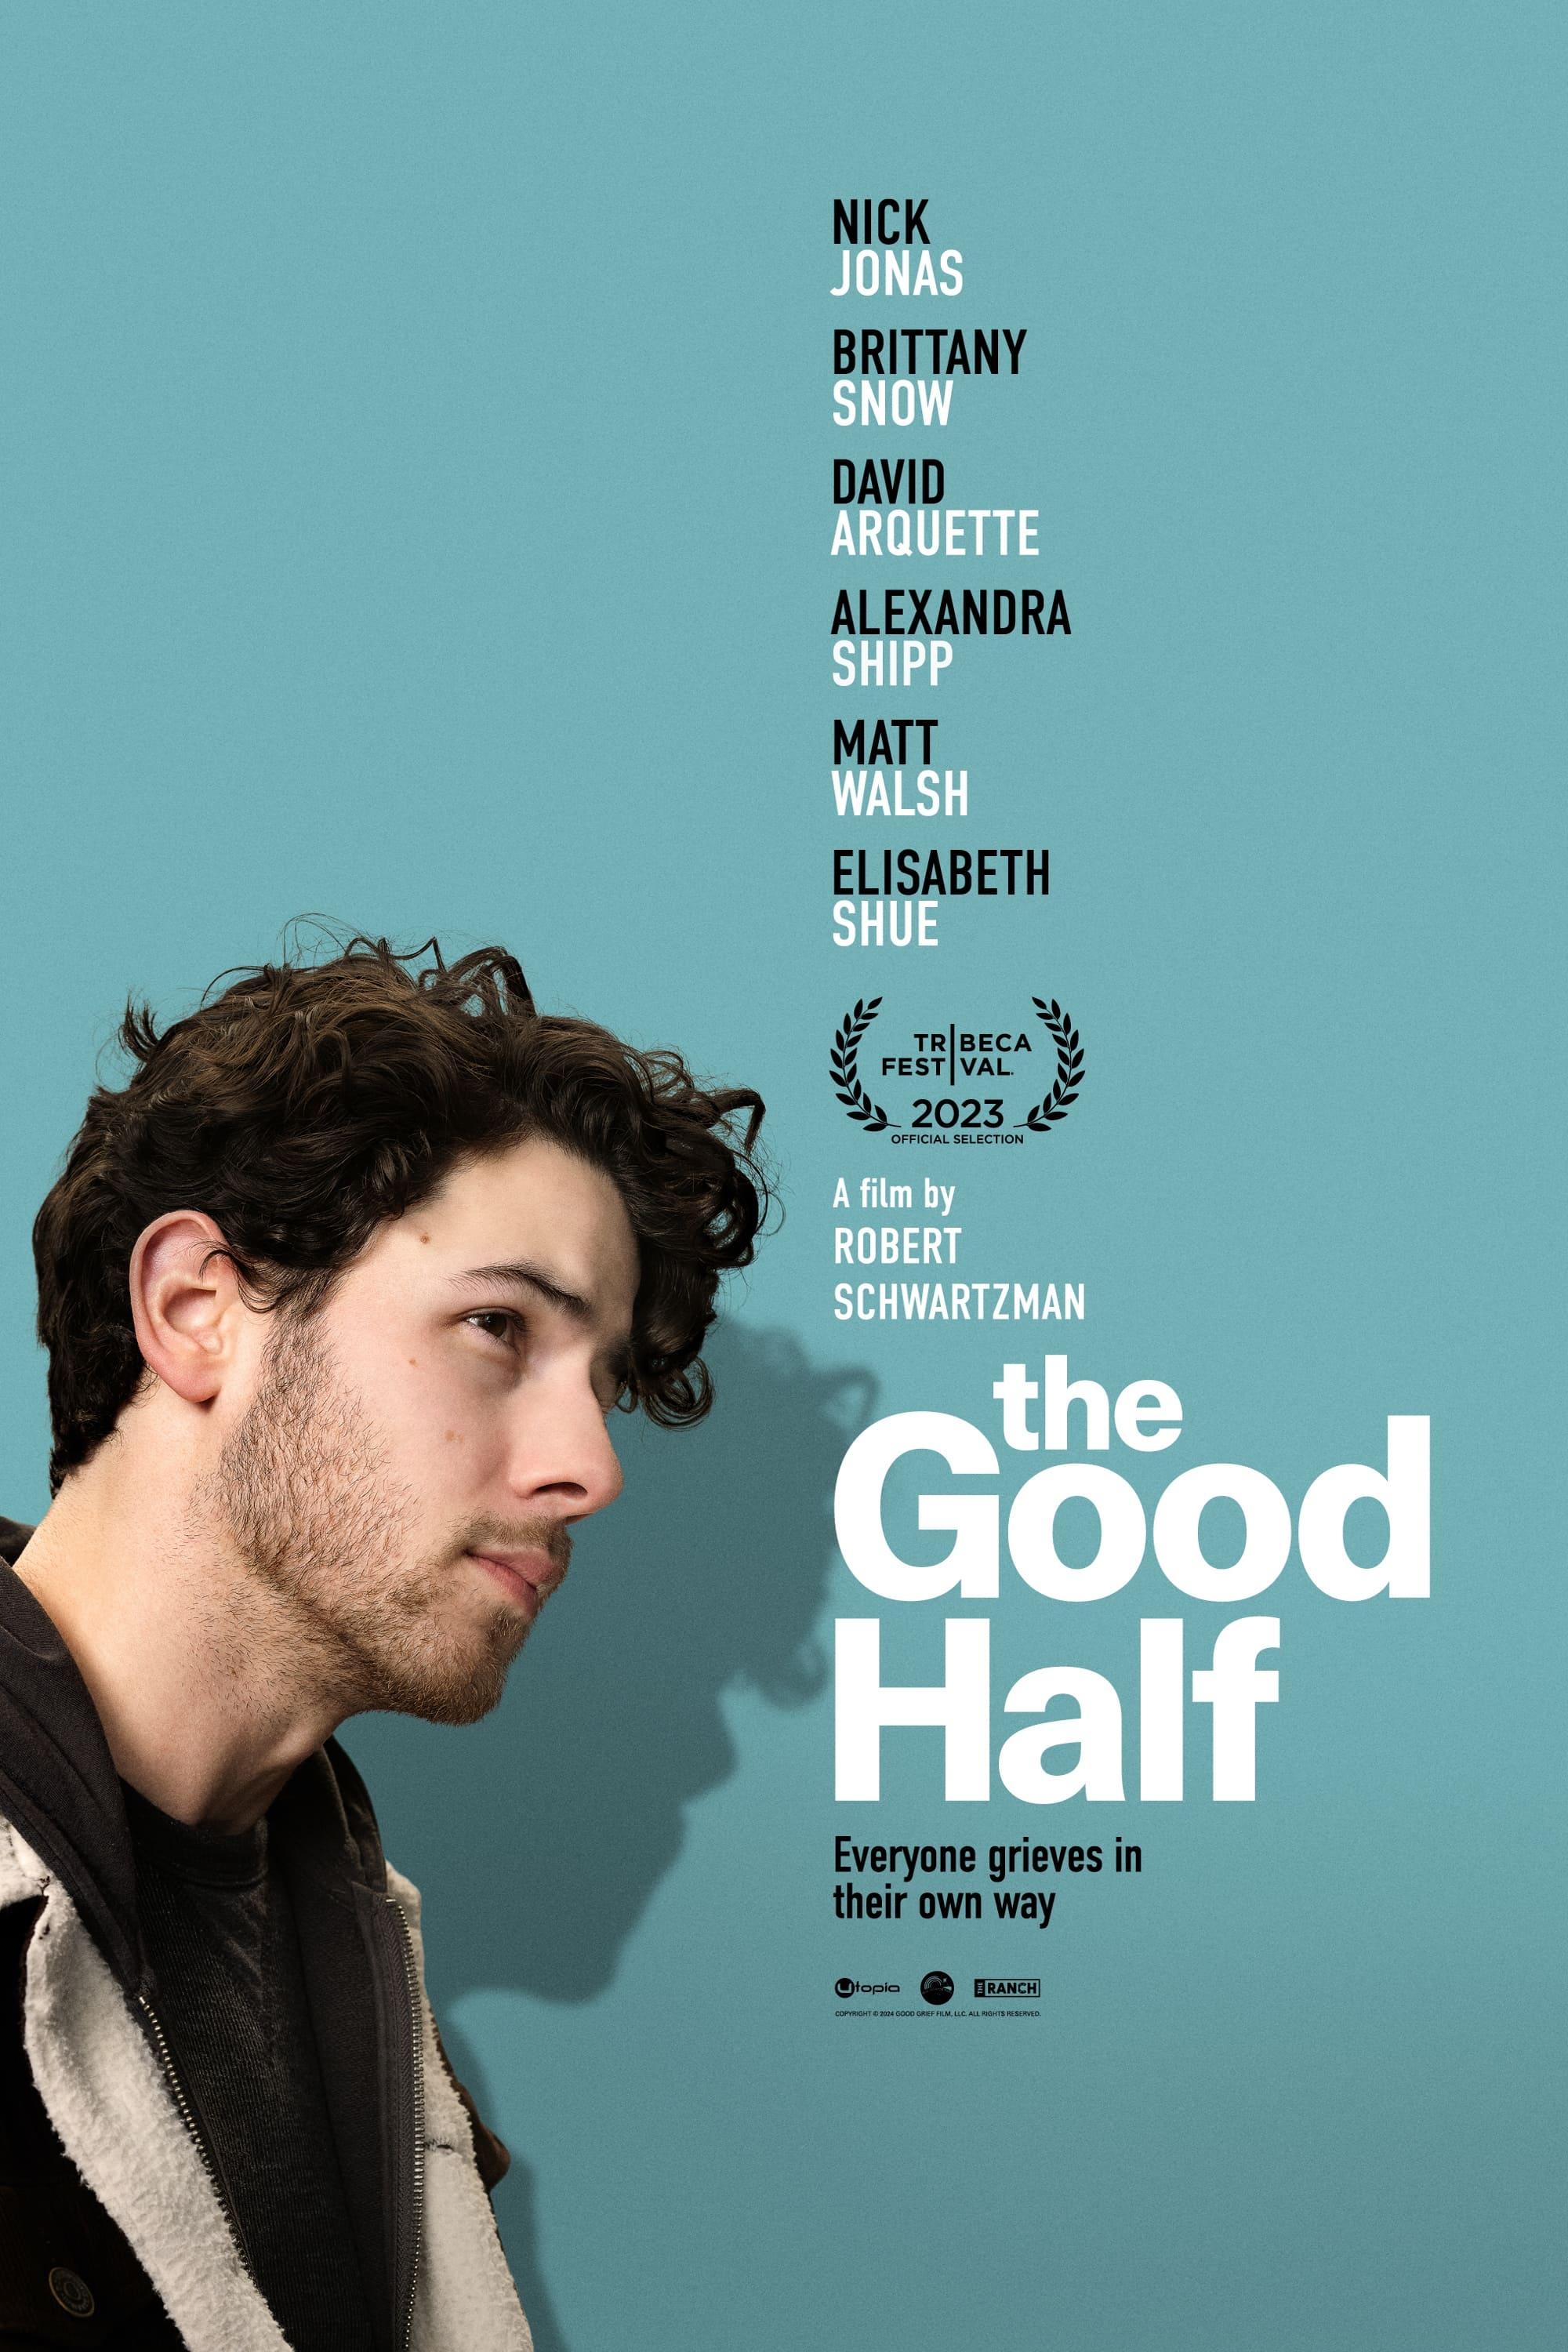 The Good Half poster